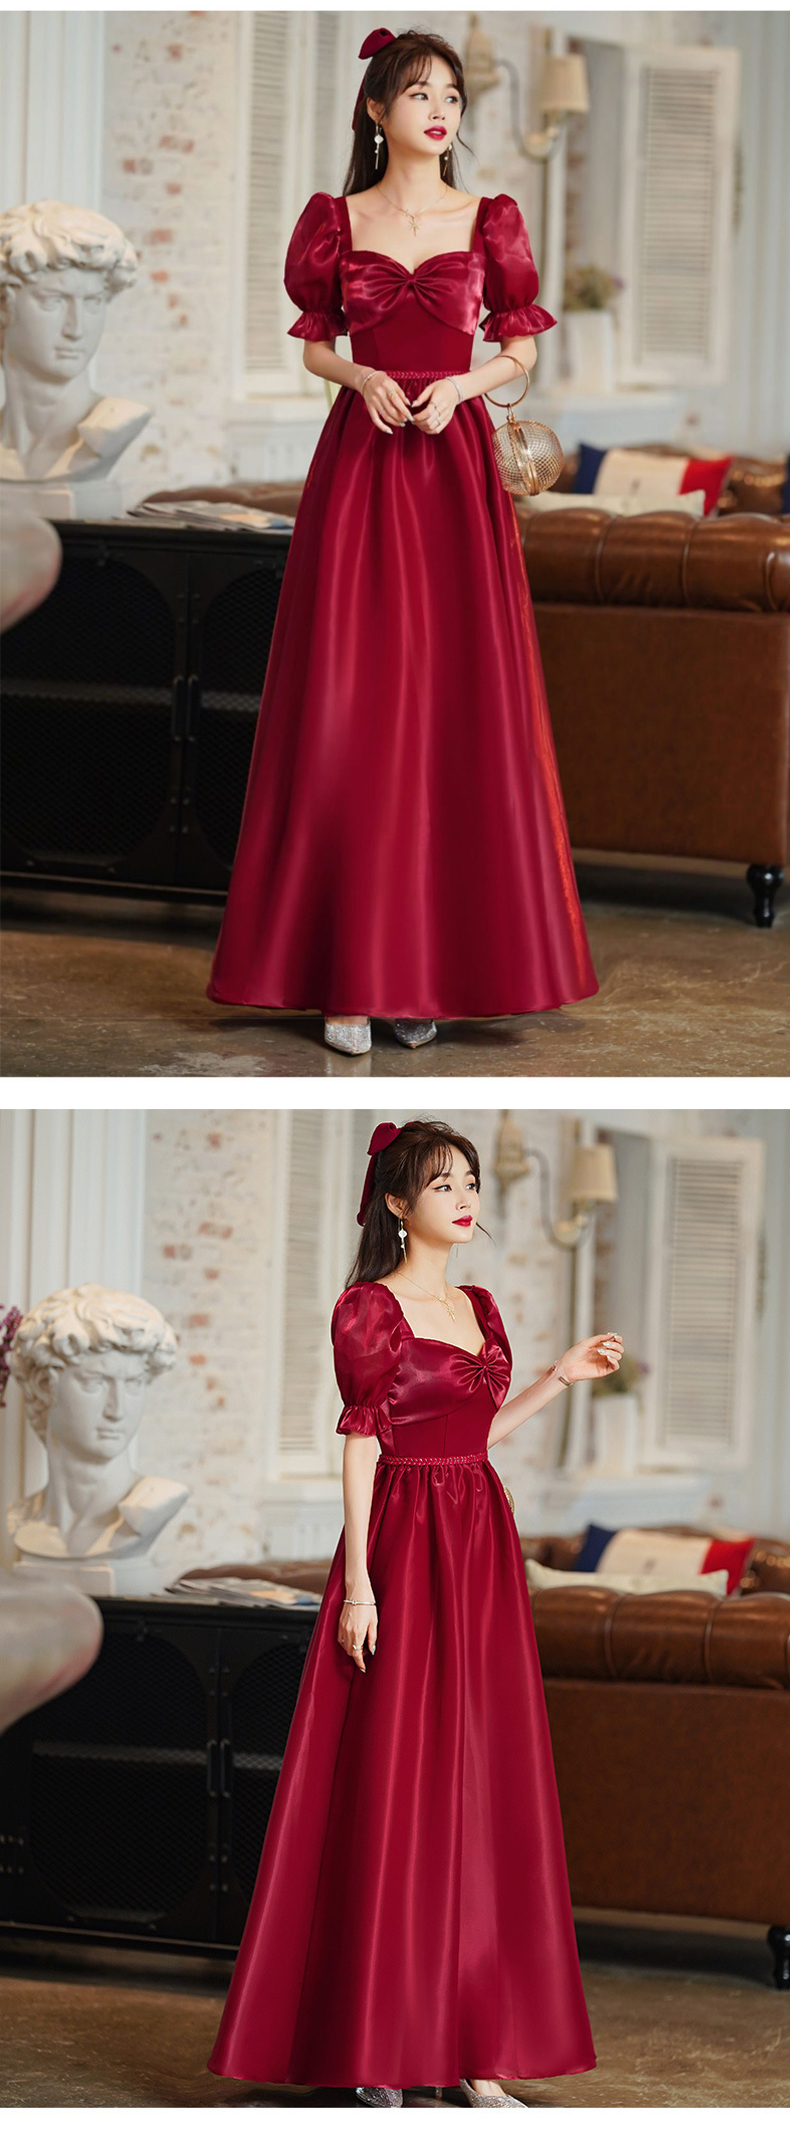 Simple Elegant Red Satin Long Evening Wedding Dress Plus Size11